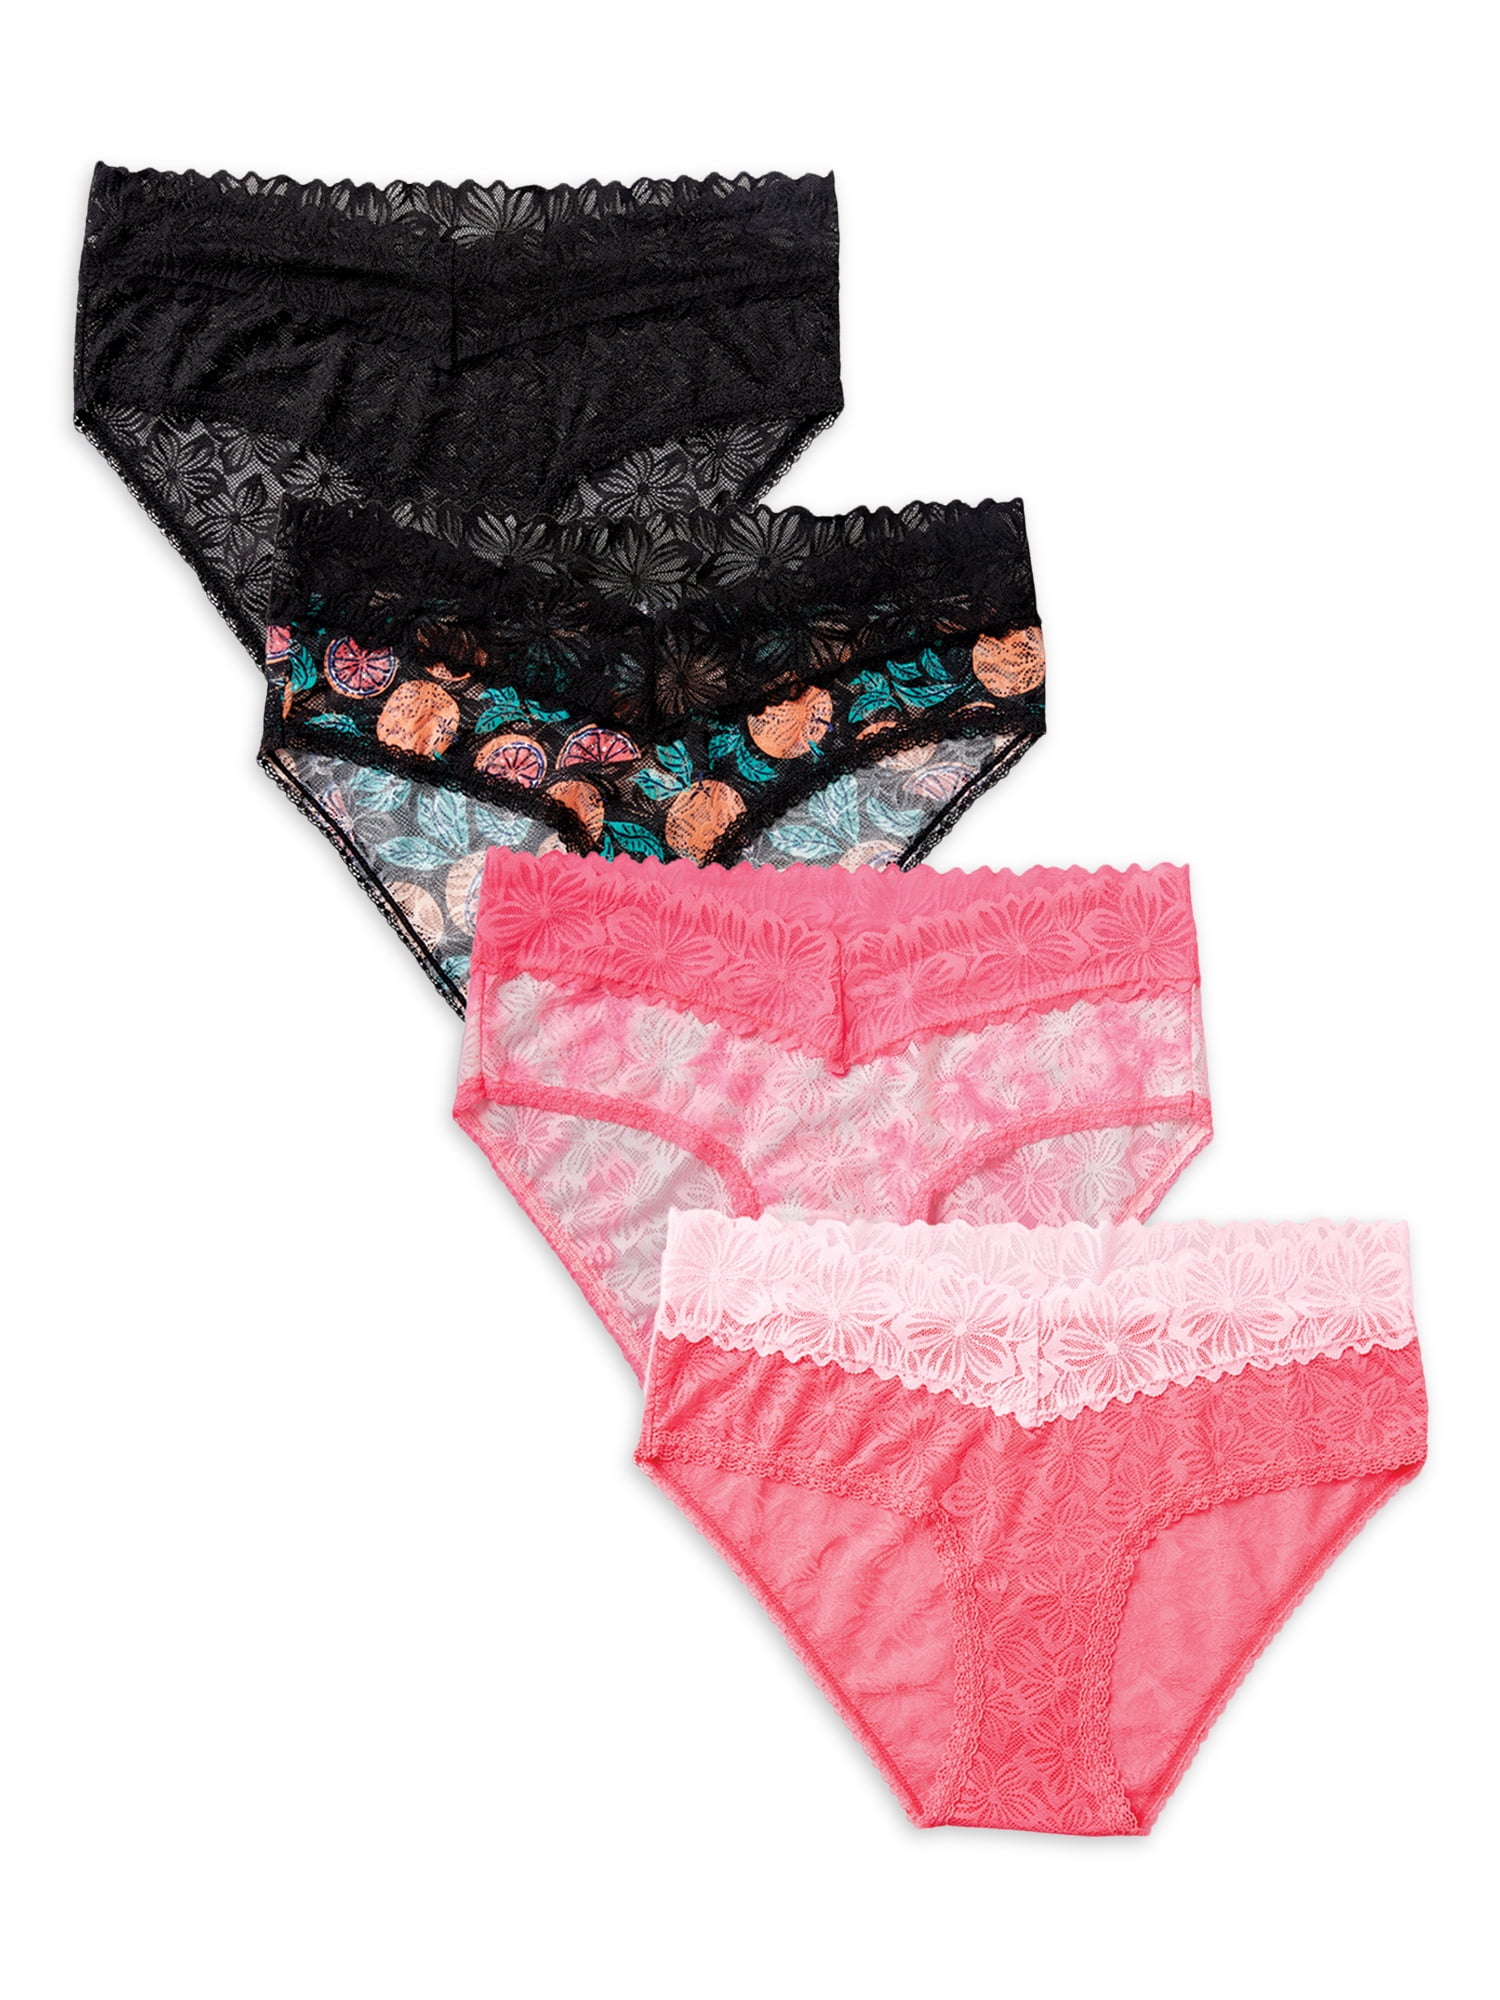 Women's Juniors No Boundaries Lace Hipster Panties 5 Pack XS/S NEW Green Pinks 